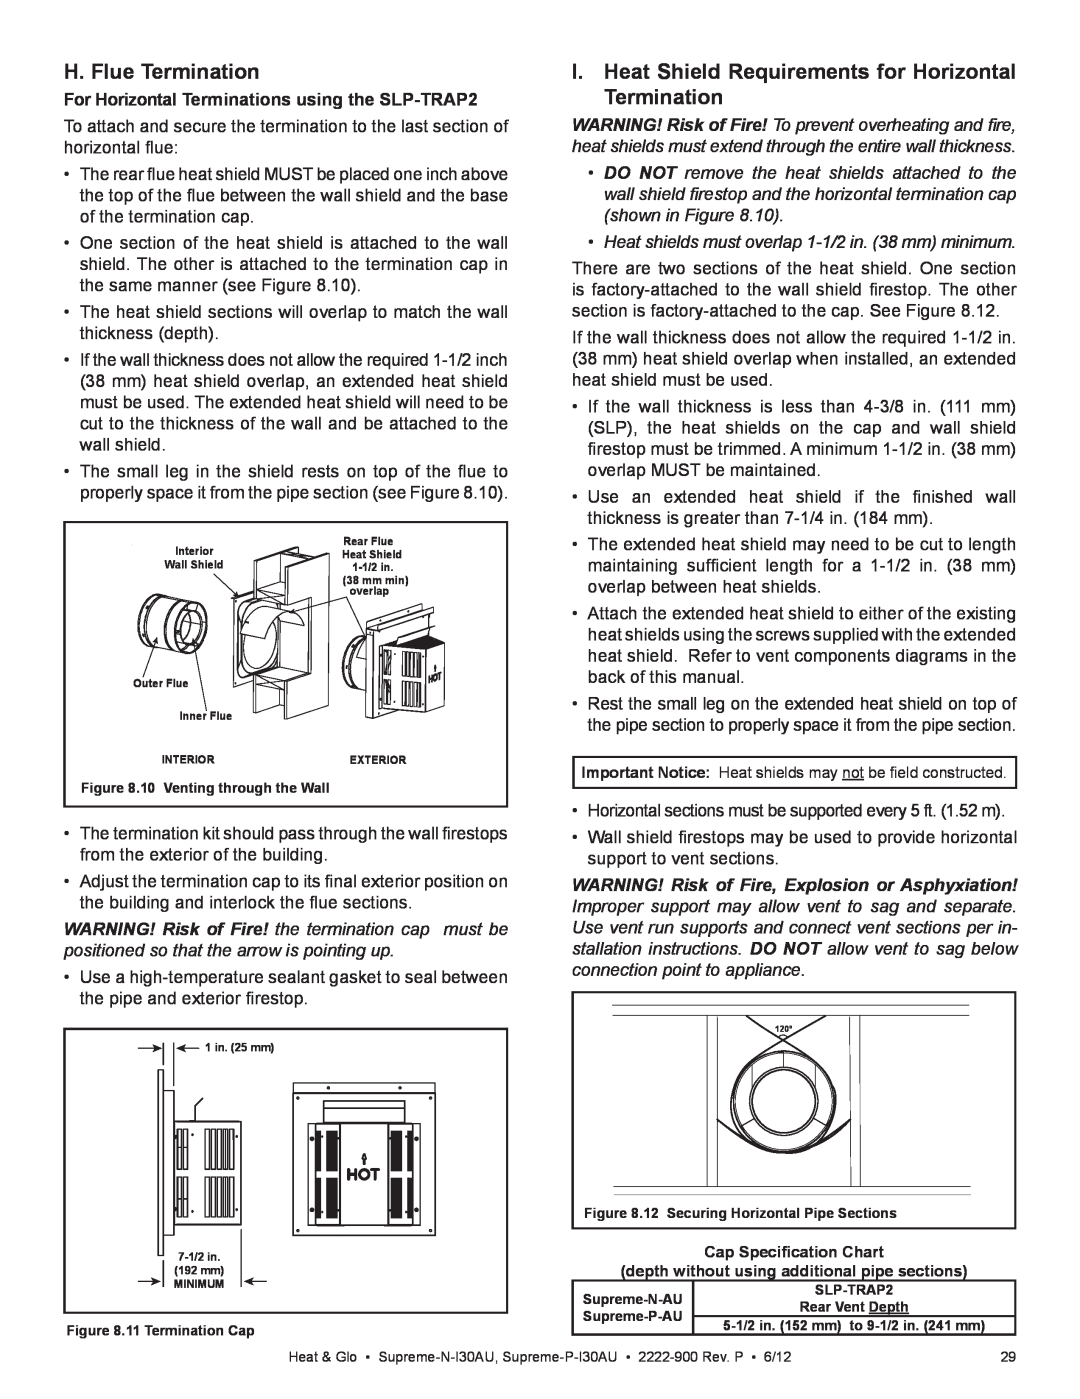 Heat & Glo LifeStyle SUPREME-N-I30AU H. Flue Termination, I. Heat Shield Requirements for Horizontal Termination 